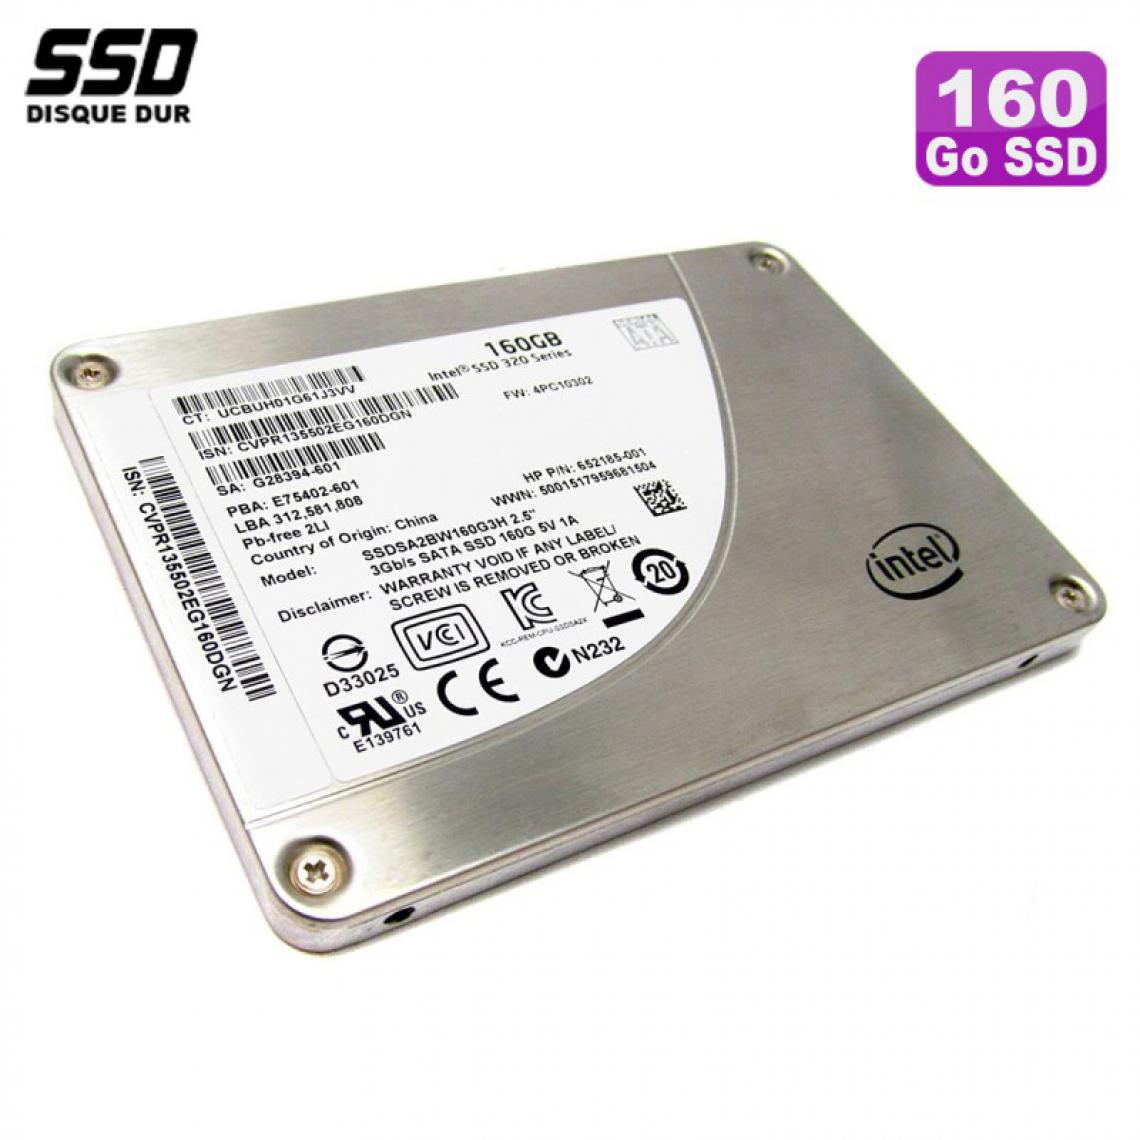 Intel - SSD 160Go Intel 320 Series SSDSA2BW160G3H 652185-002 658540-001 4PC10365 3Gbps - Disque Dur interne